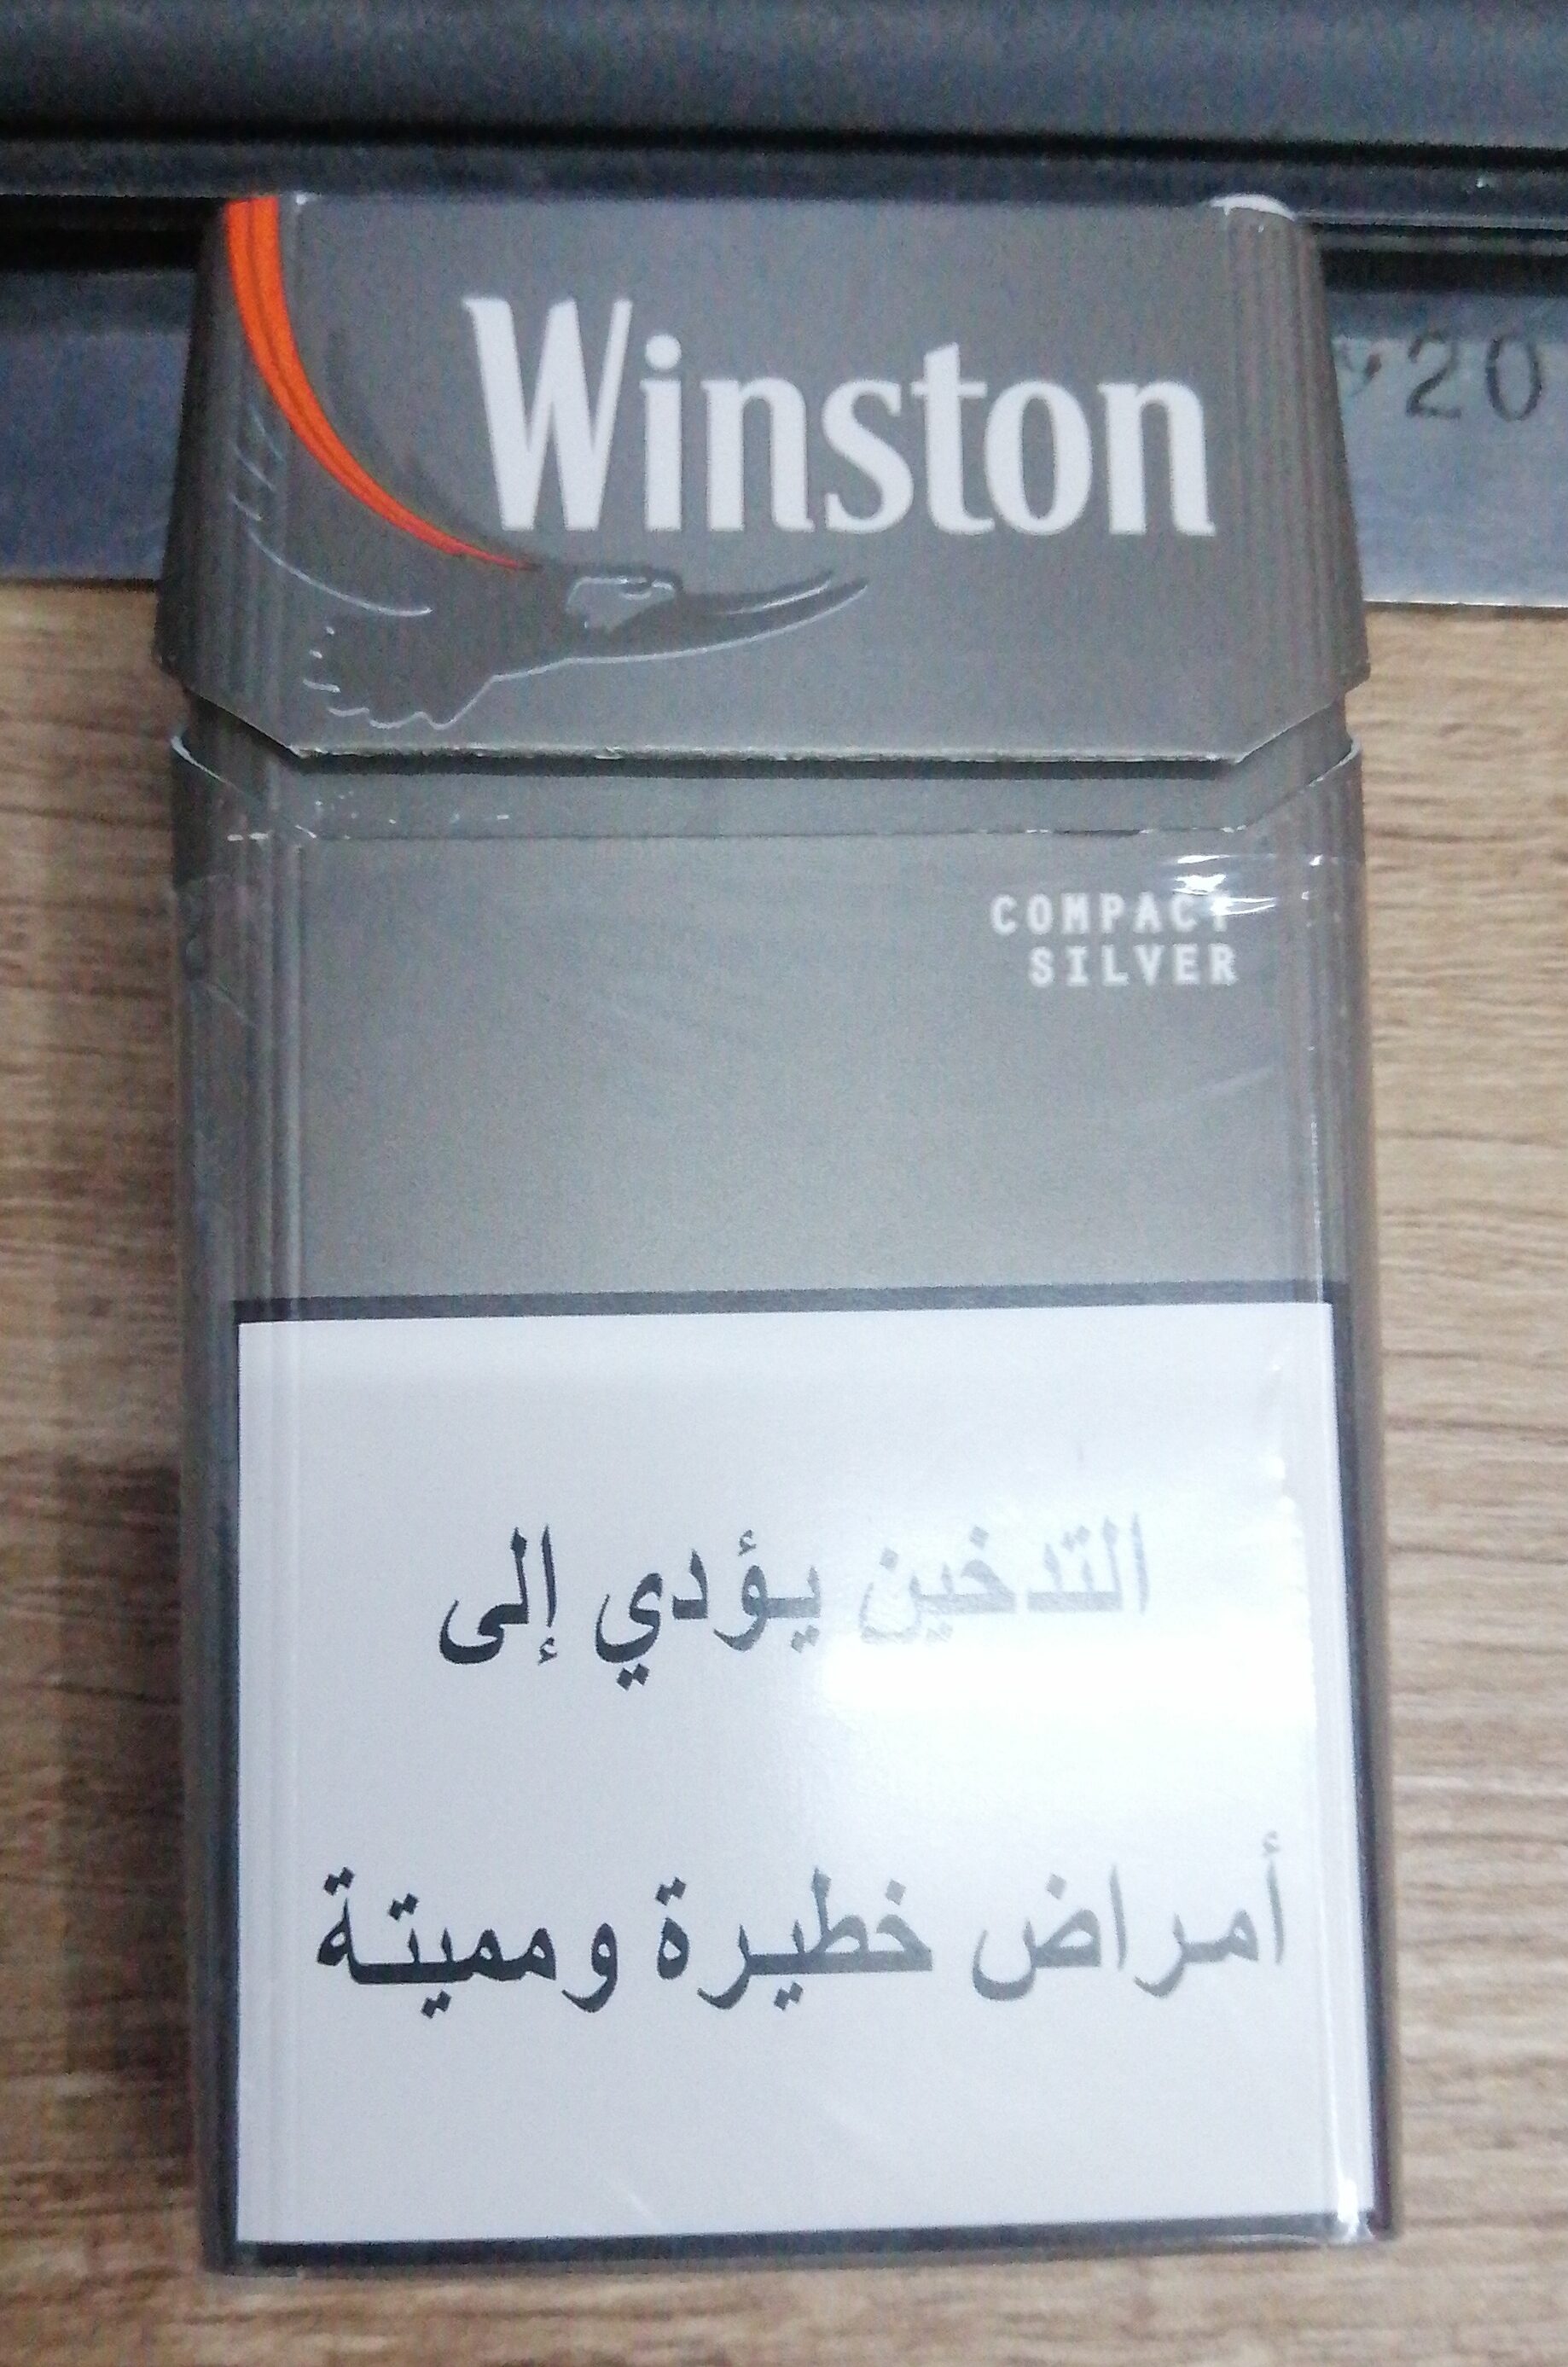 Winston compact - Product - en